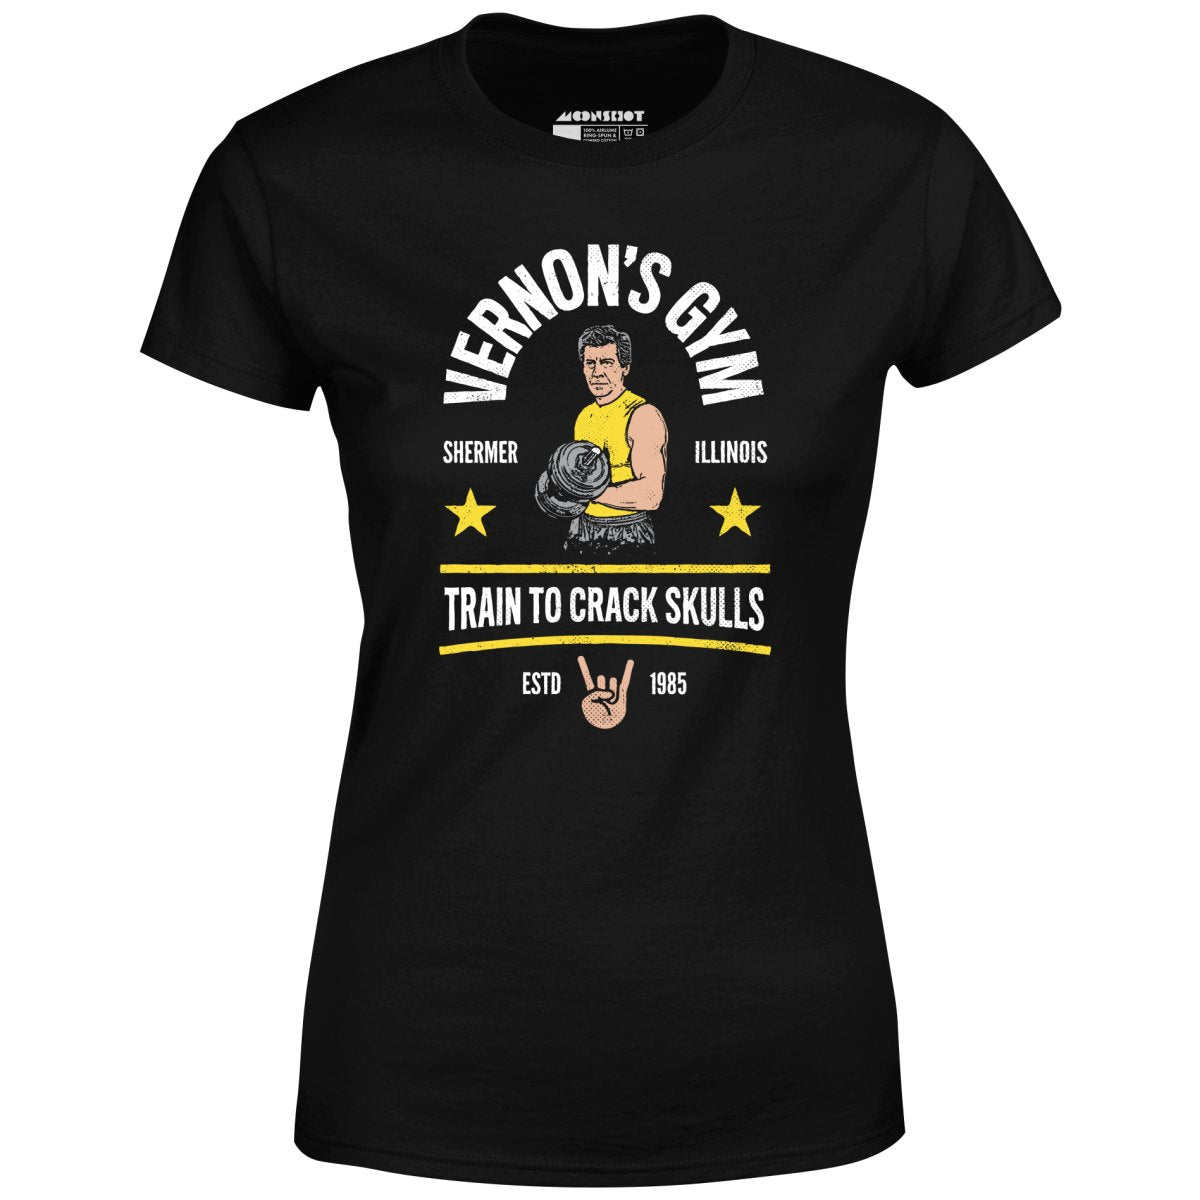 Vernon's Gym - Women's T-Shirt